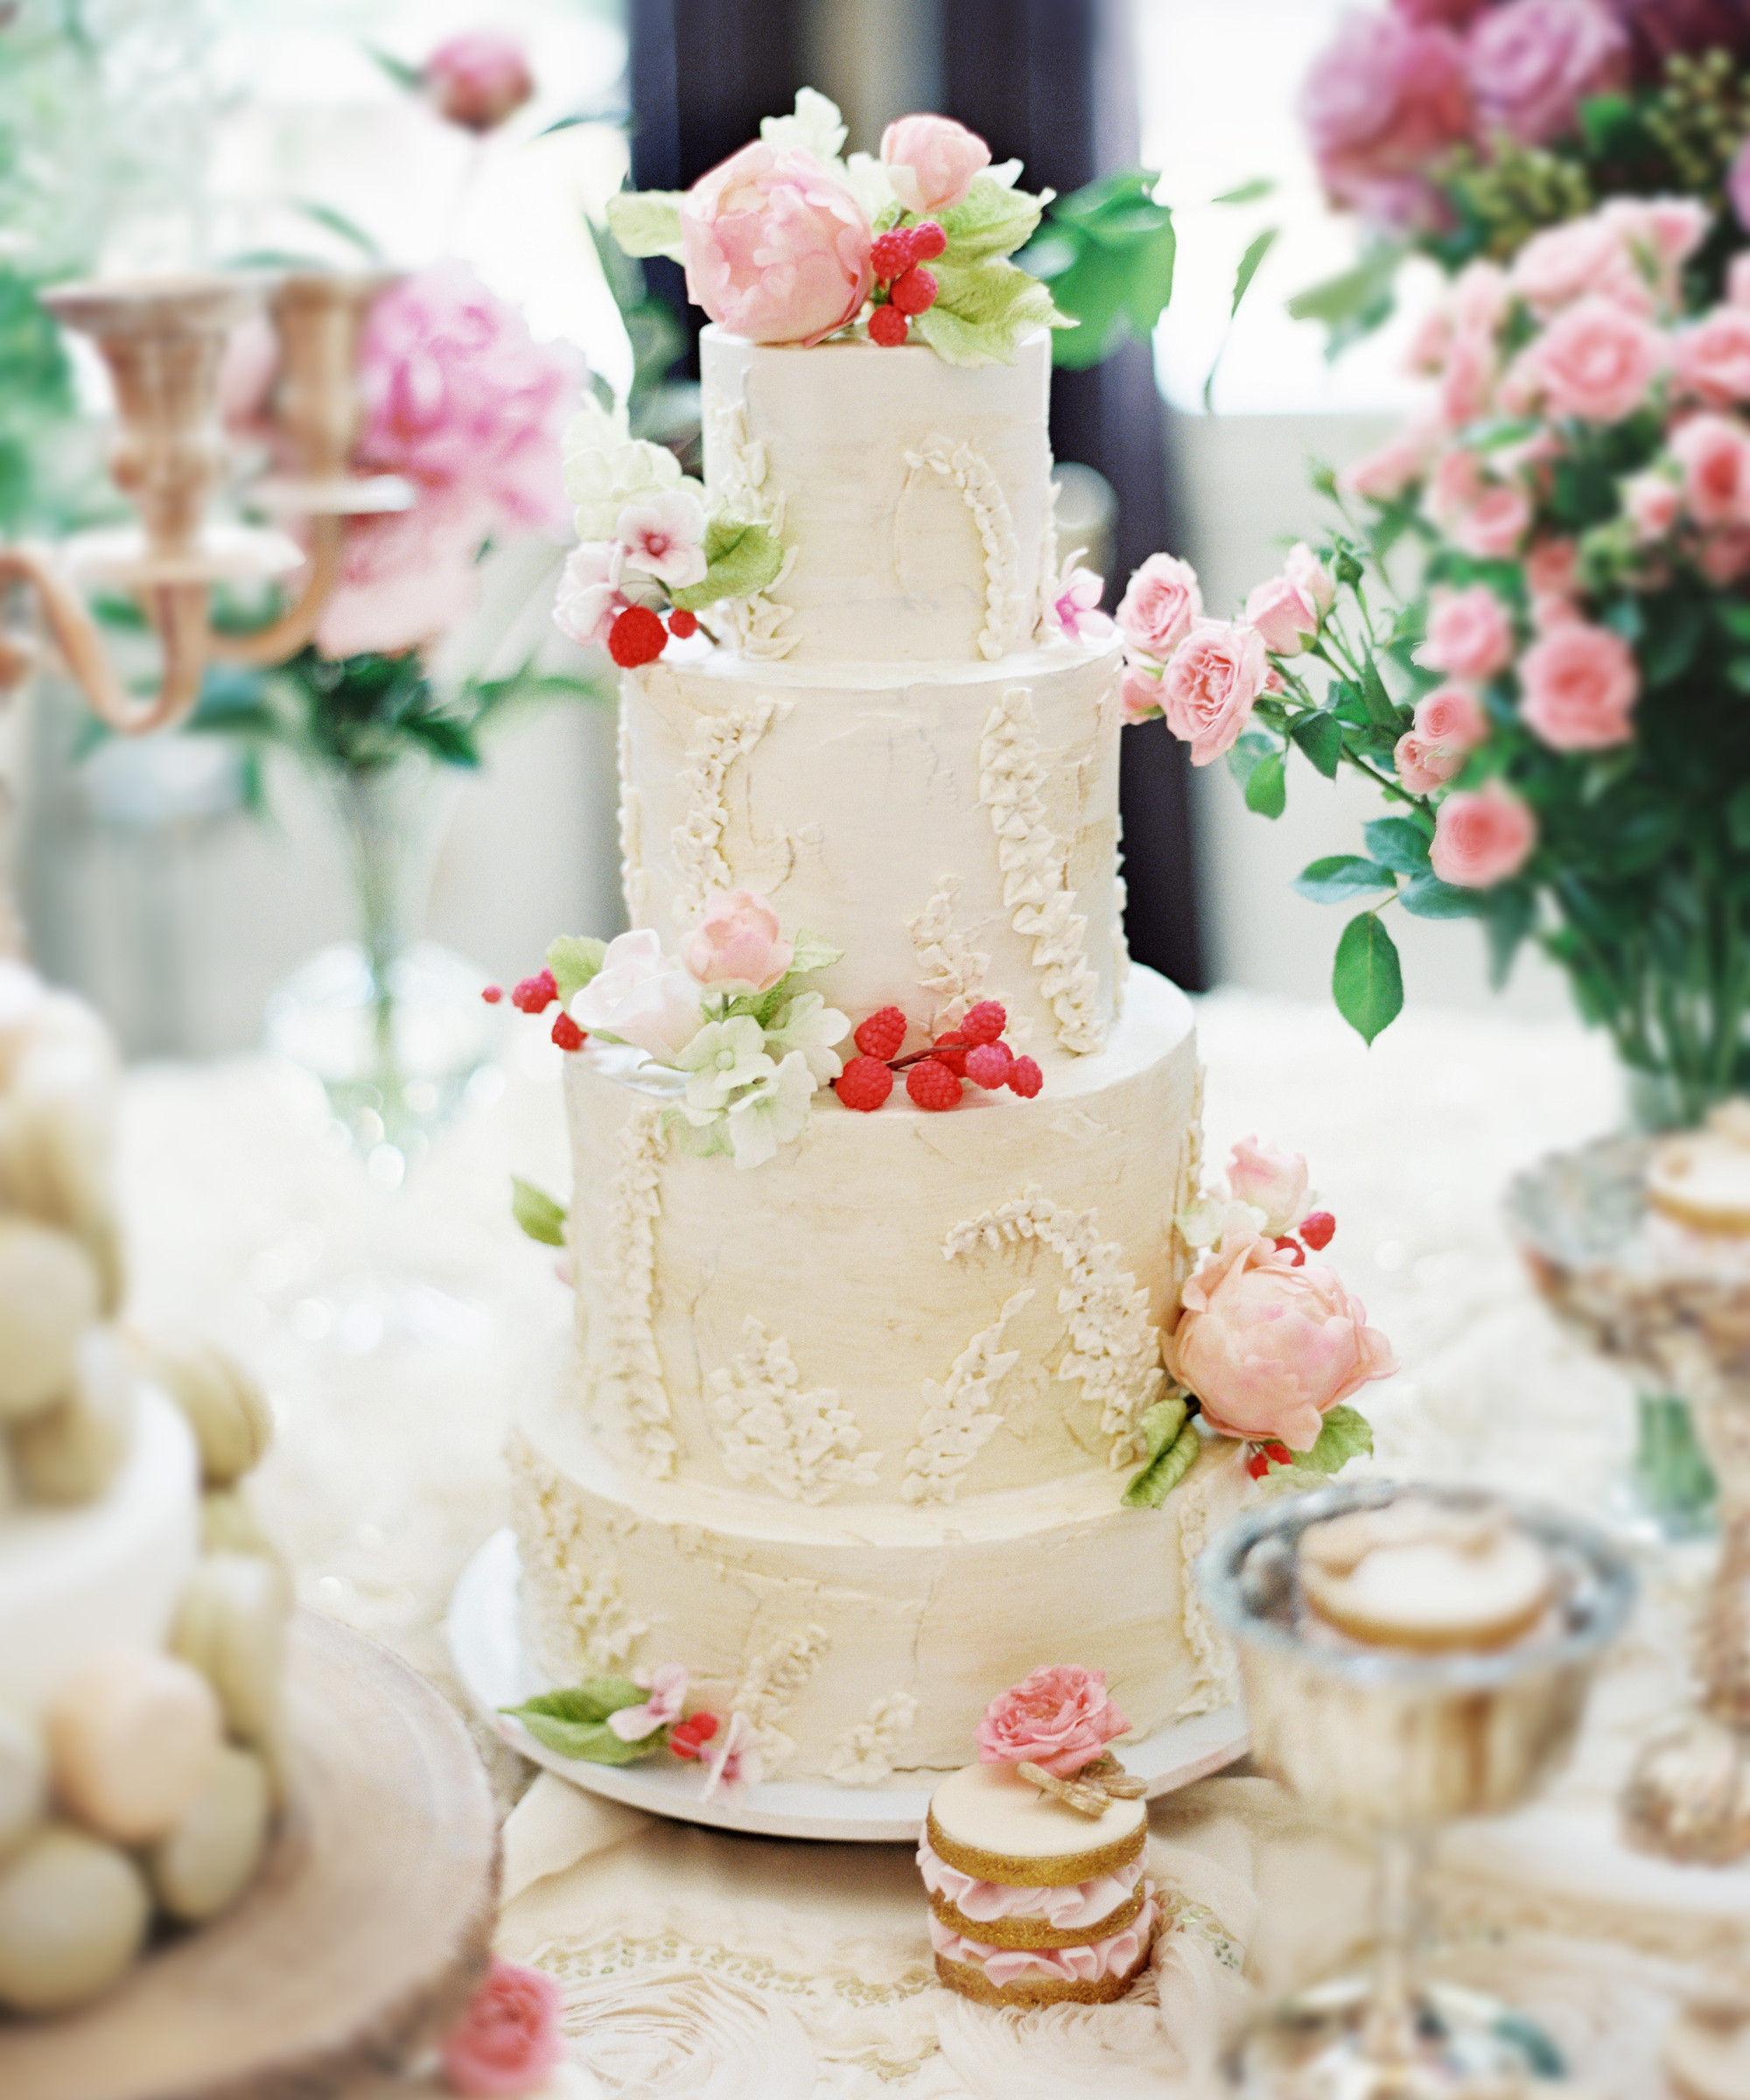 Www Wedding Cakes
 Vegan and Gluten Free Wedding Cake Ideas Alternative